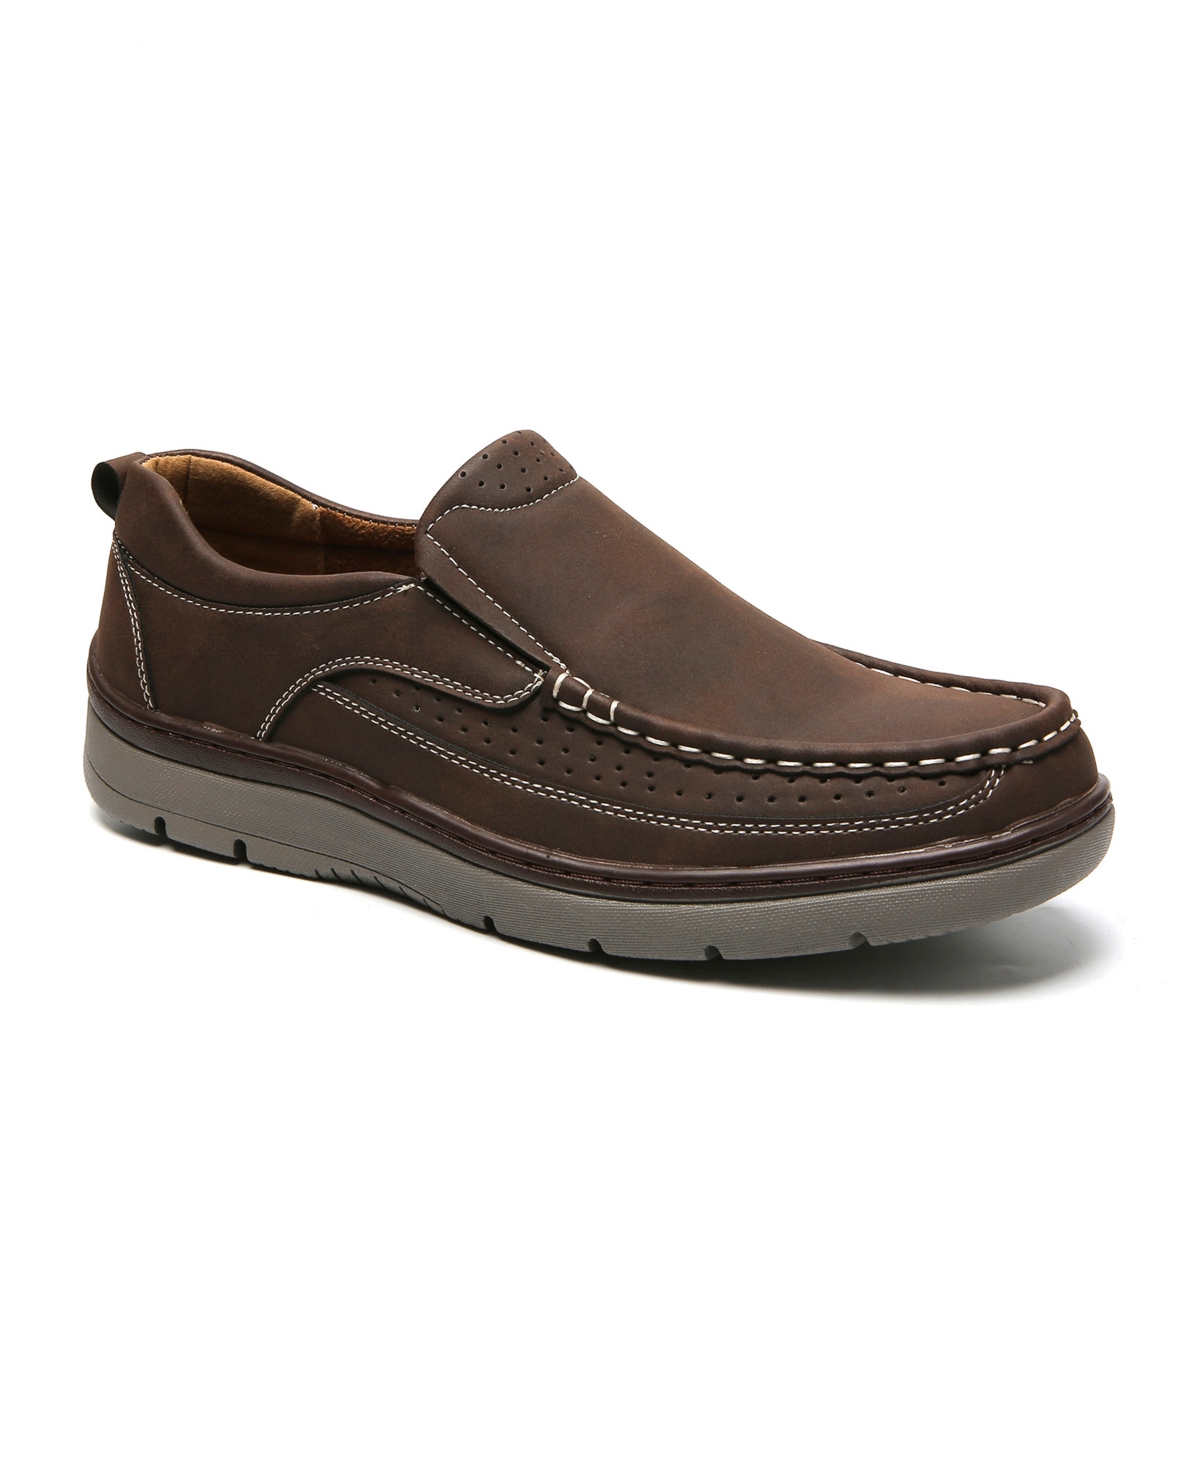 Men's Slip On Comfort Casual Shoes - Brown